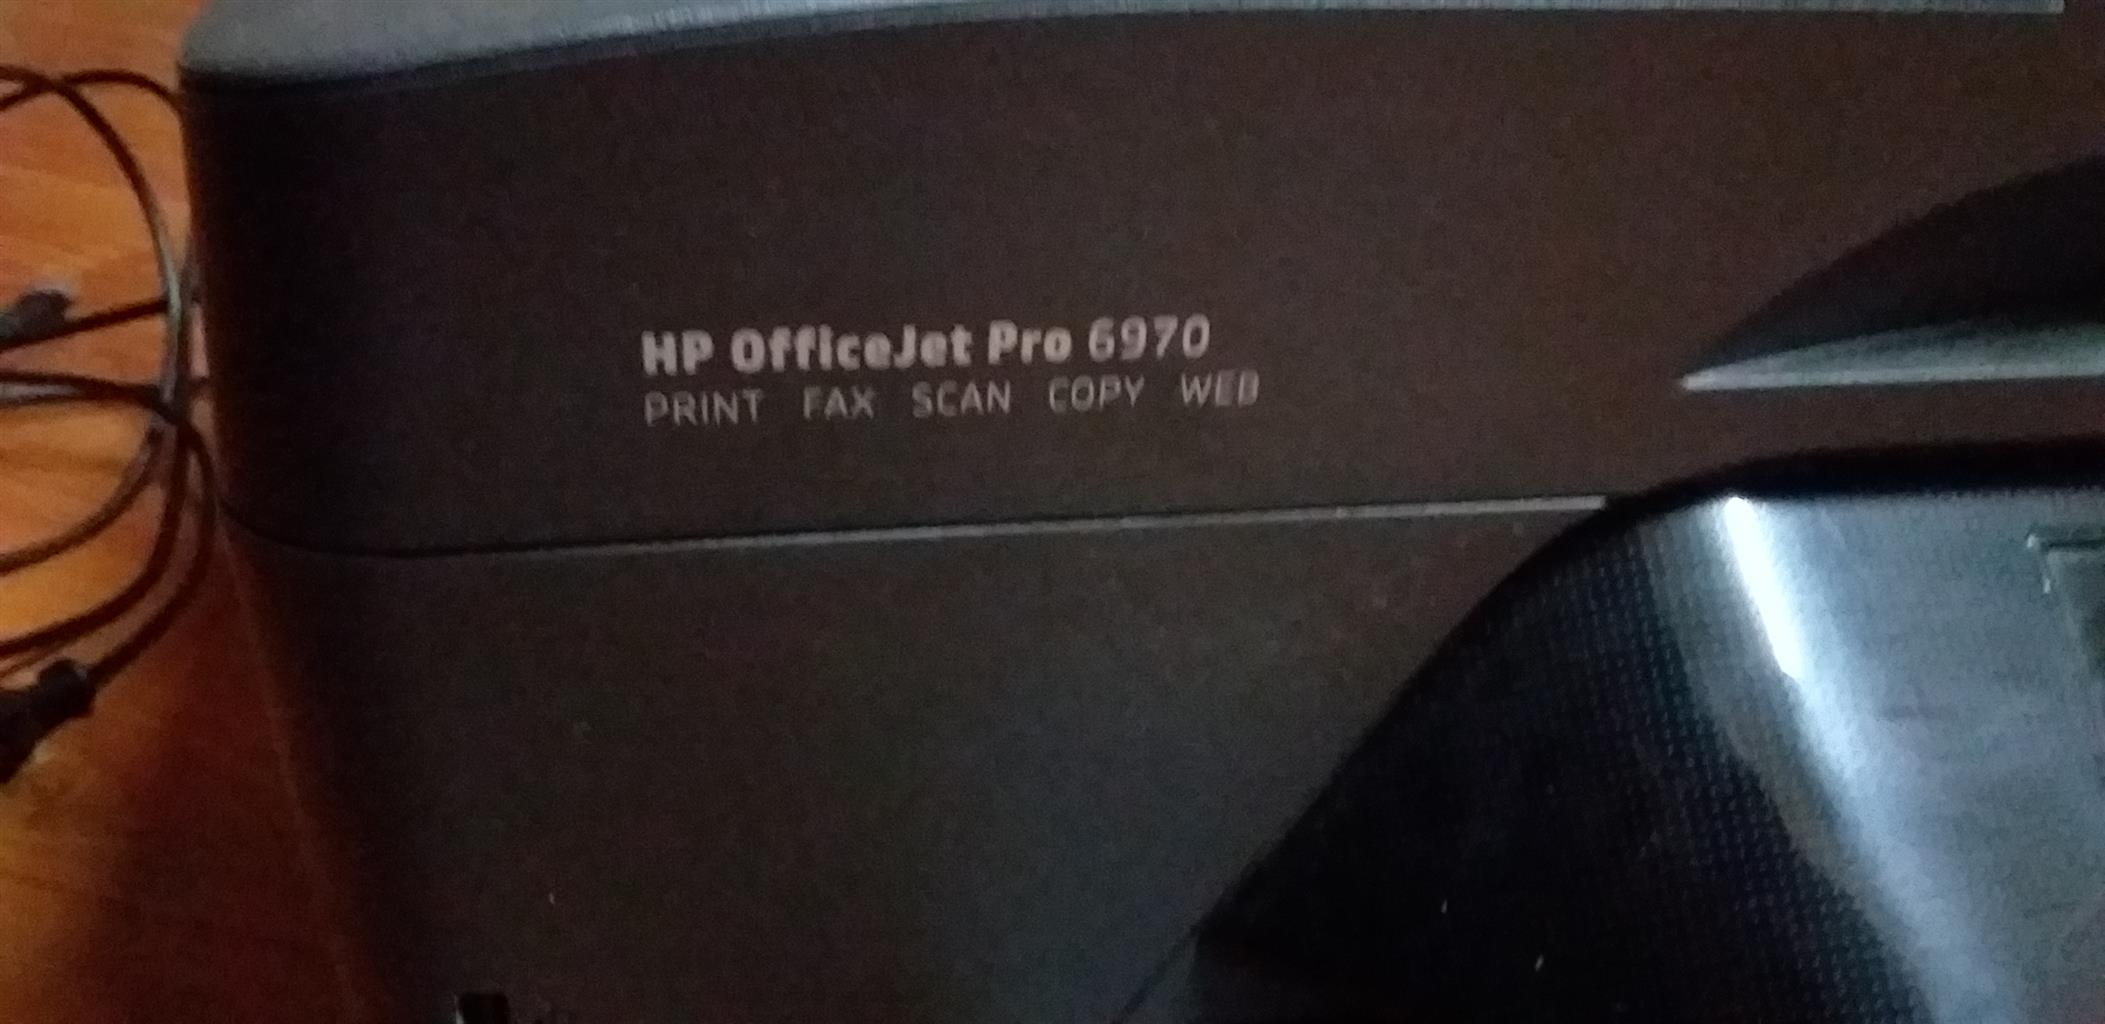 Printer Officejet Hp 6970 Pro for sale